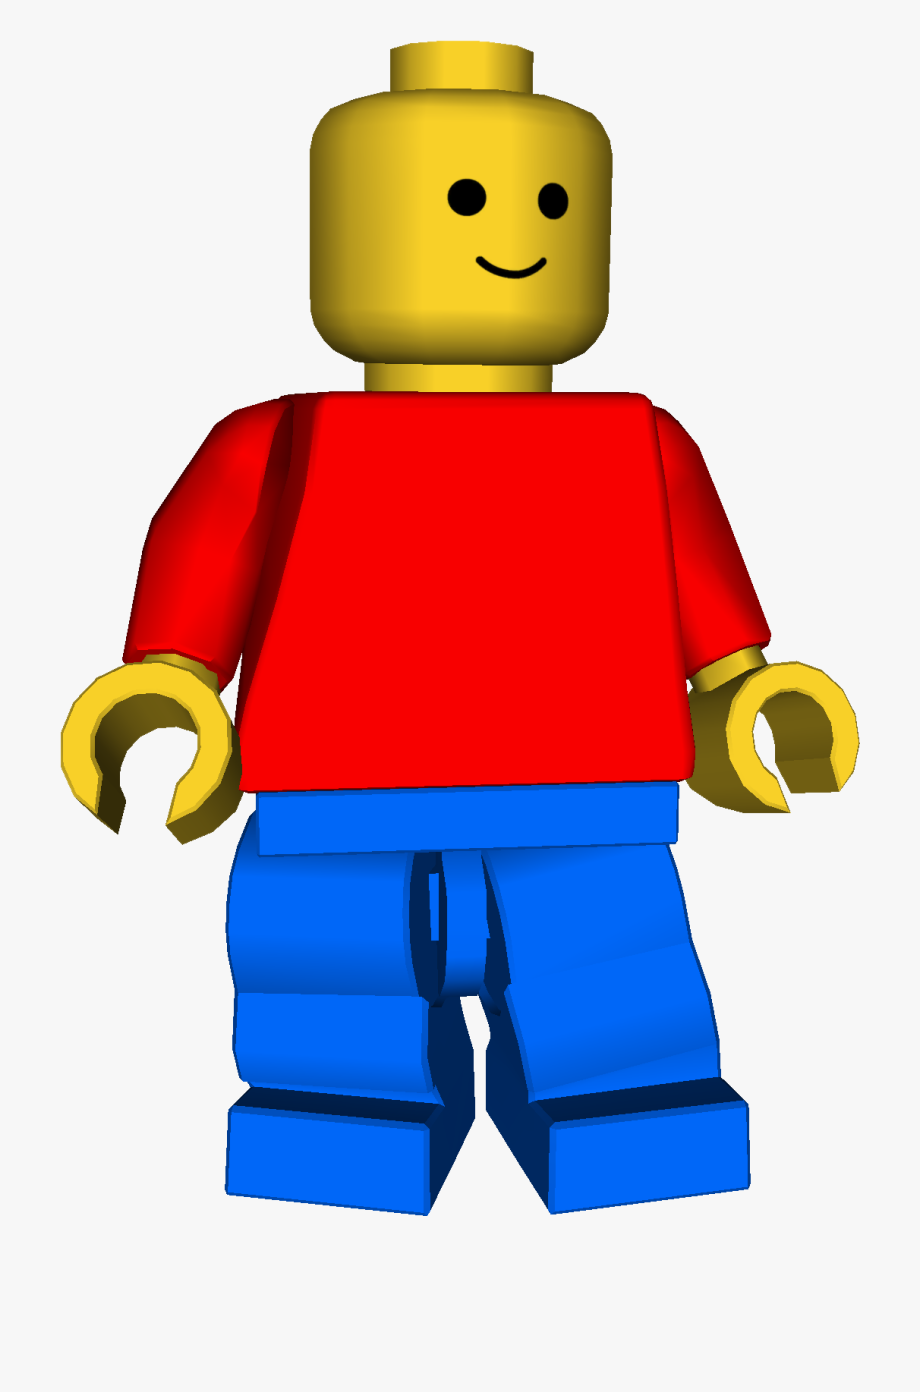 Lego clipart figure lego. Universe party birthday minifigure